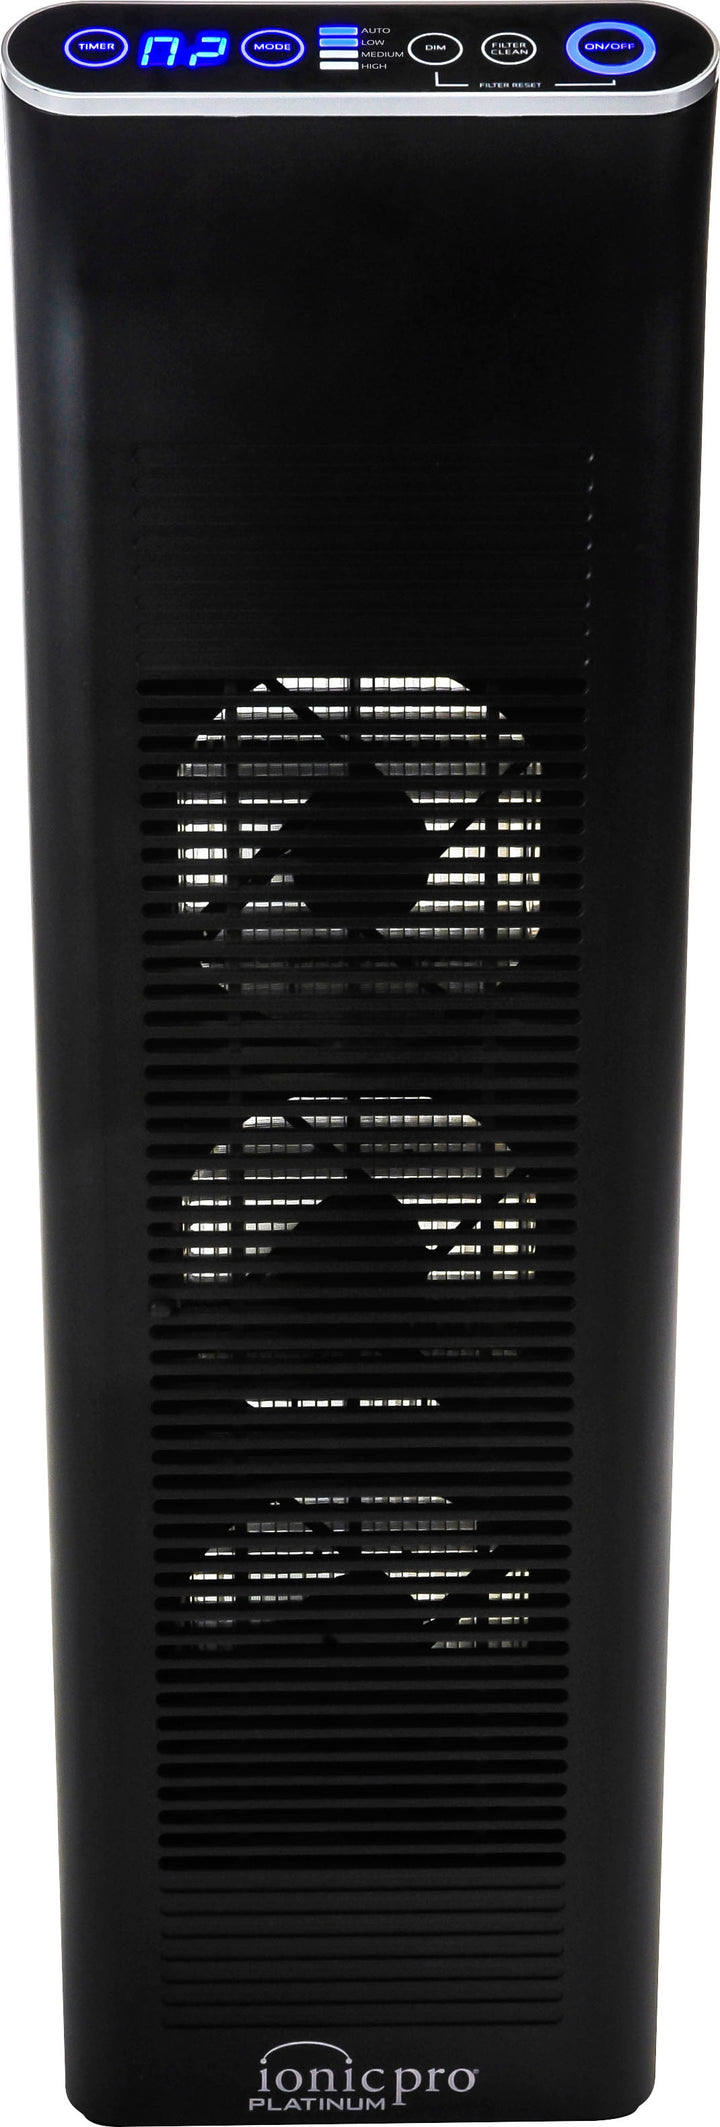 Envion - Ionic Pro Platinum TA750 Air Purifier - Black_3